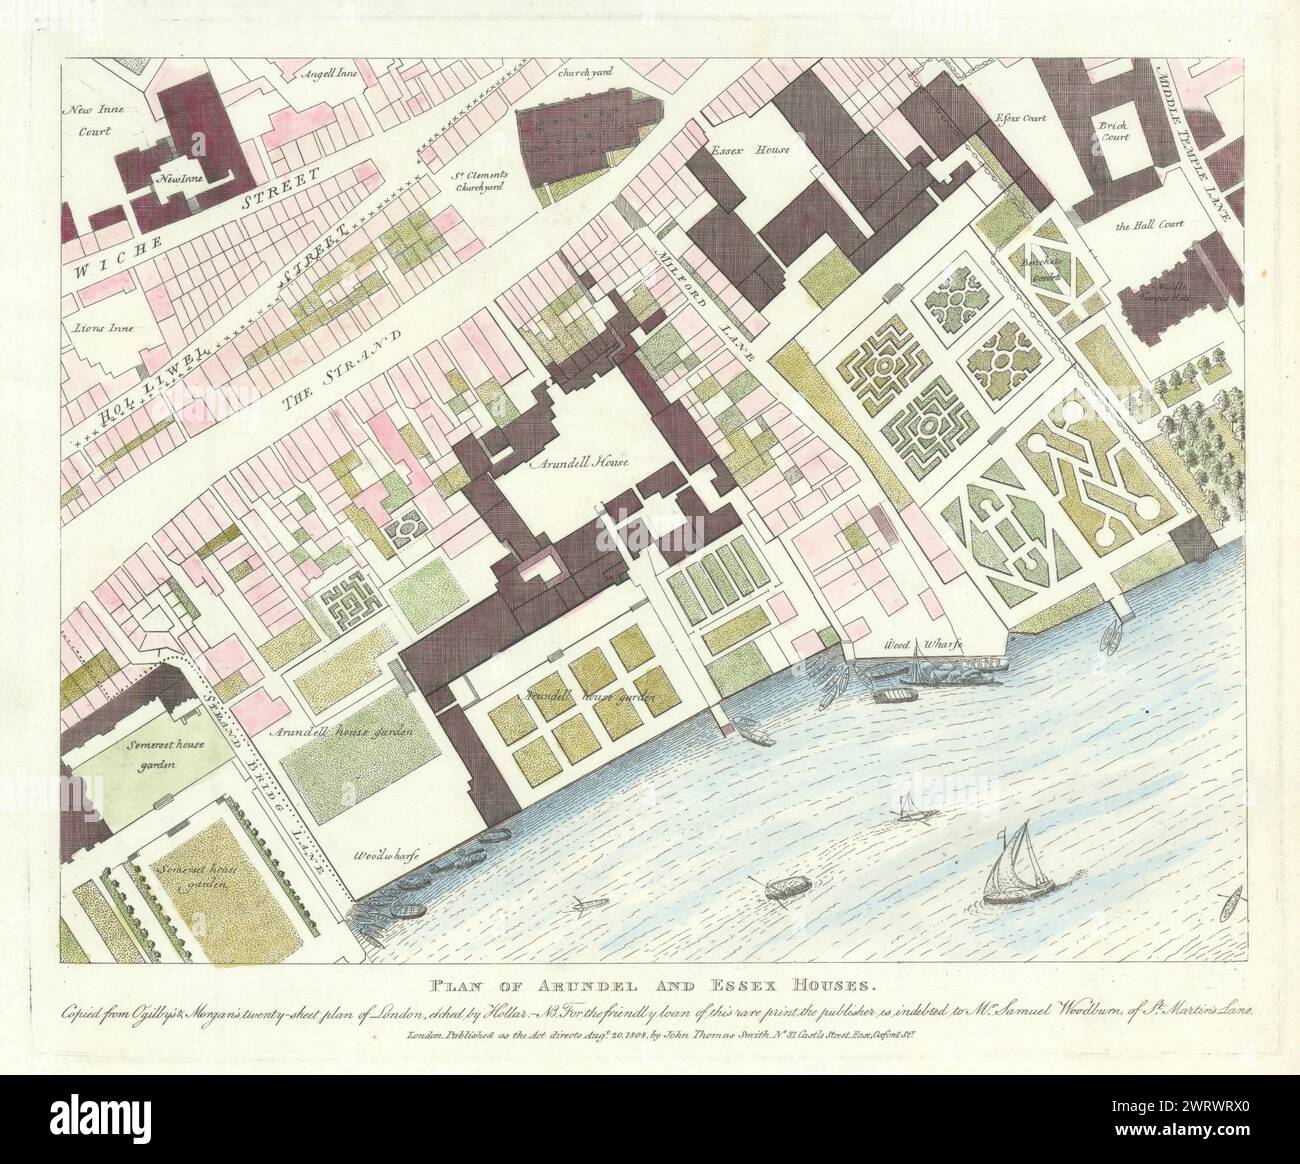 Strand. Arundel, Essex e Somerset Houses di Ogilby & Morgan. Mappa JT SMITH 1809 Foto Stock